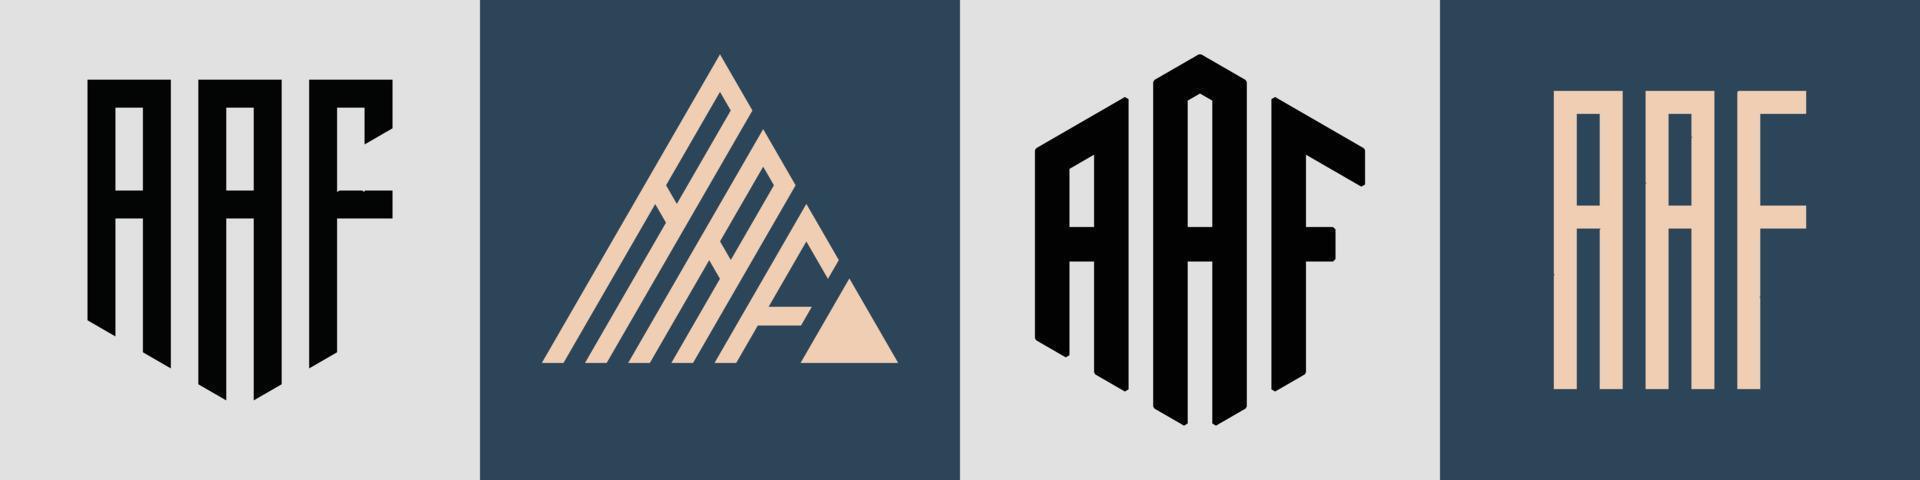 kreative einfache anfangsbuchstaben aaf logo designs paket. vektor